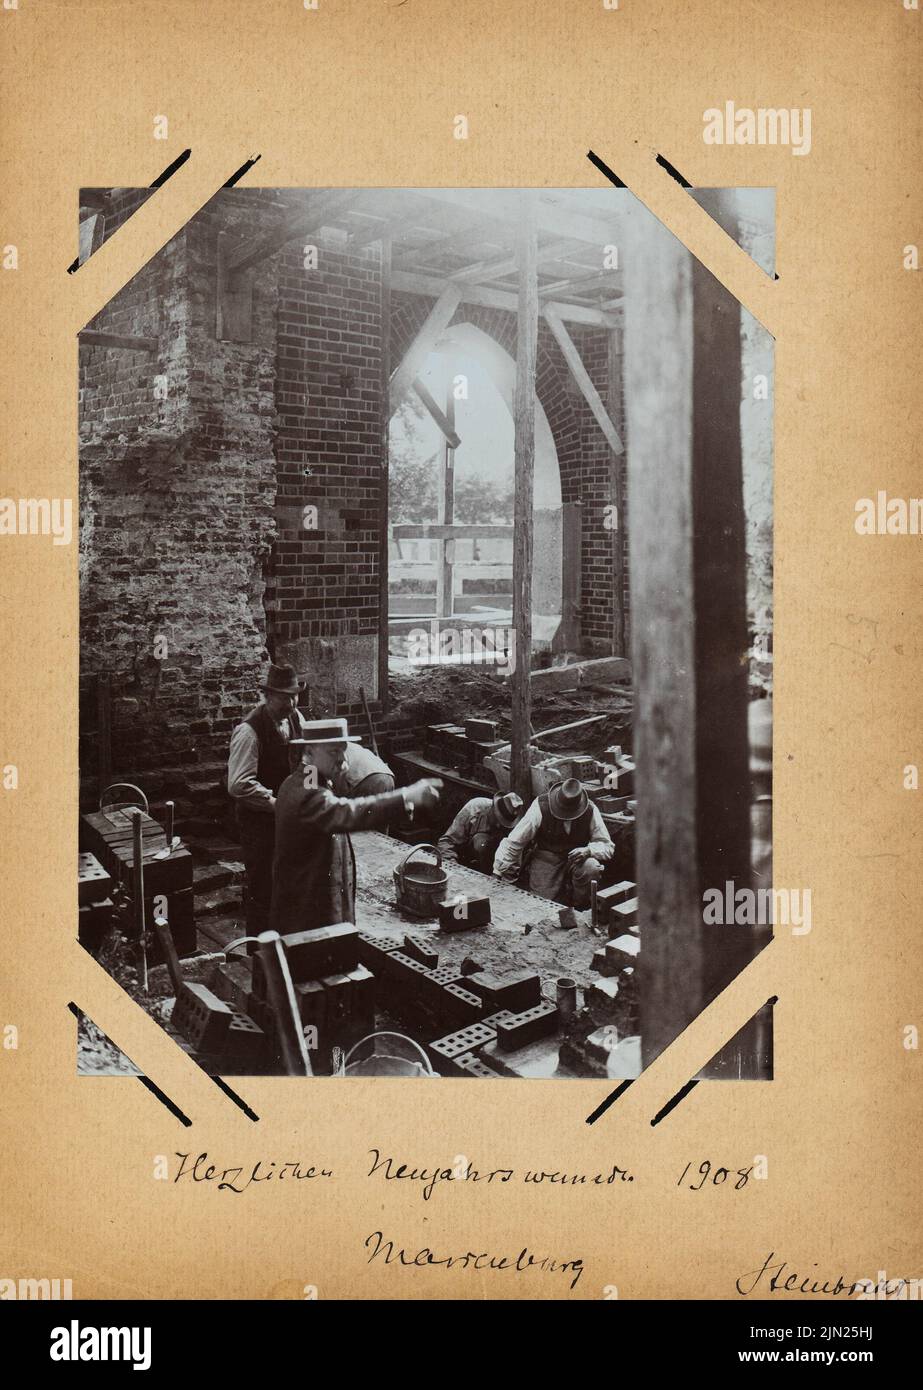 Steinbrecht Conrad (1849-1923), Marienburg, Restoration under Steinbrecht 1882-1918, letters and photos to R. Persius: Construction work. Photo on cardboard, 22.9 x 16.3 cm (including scan edges) Stock Photo